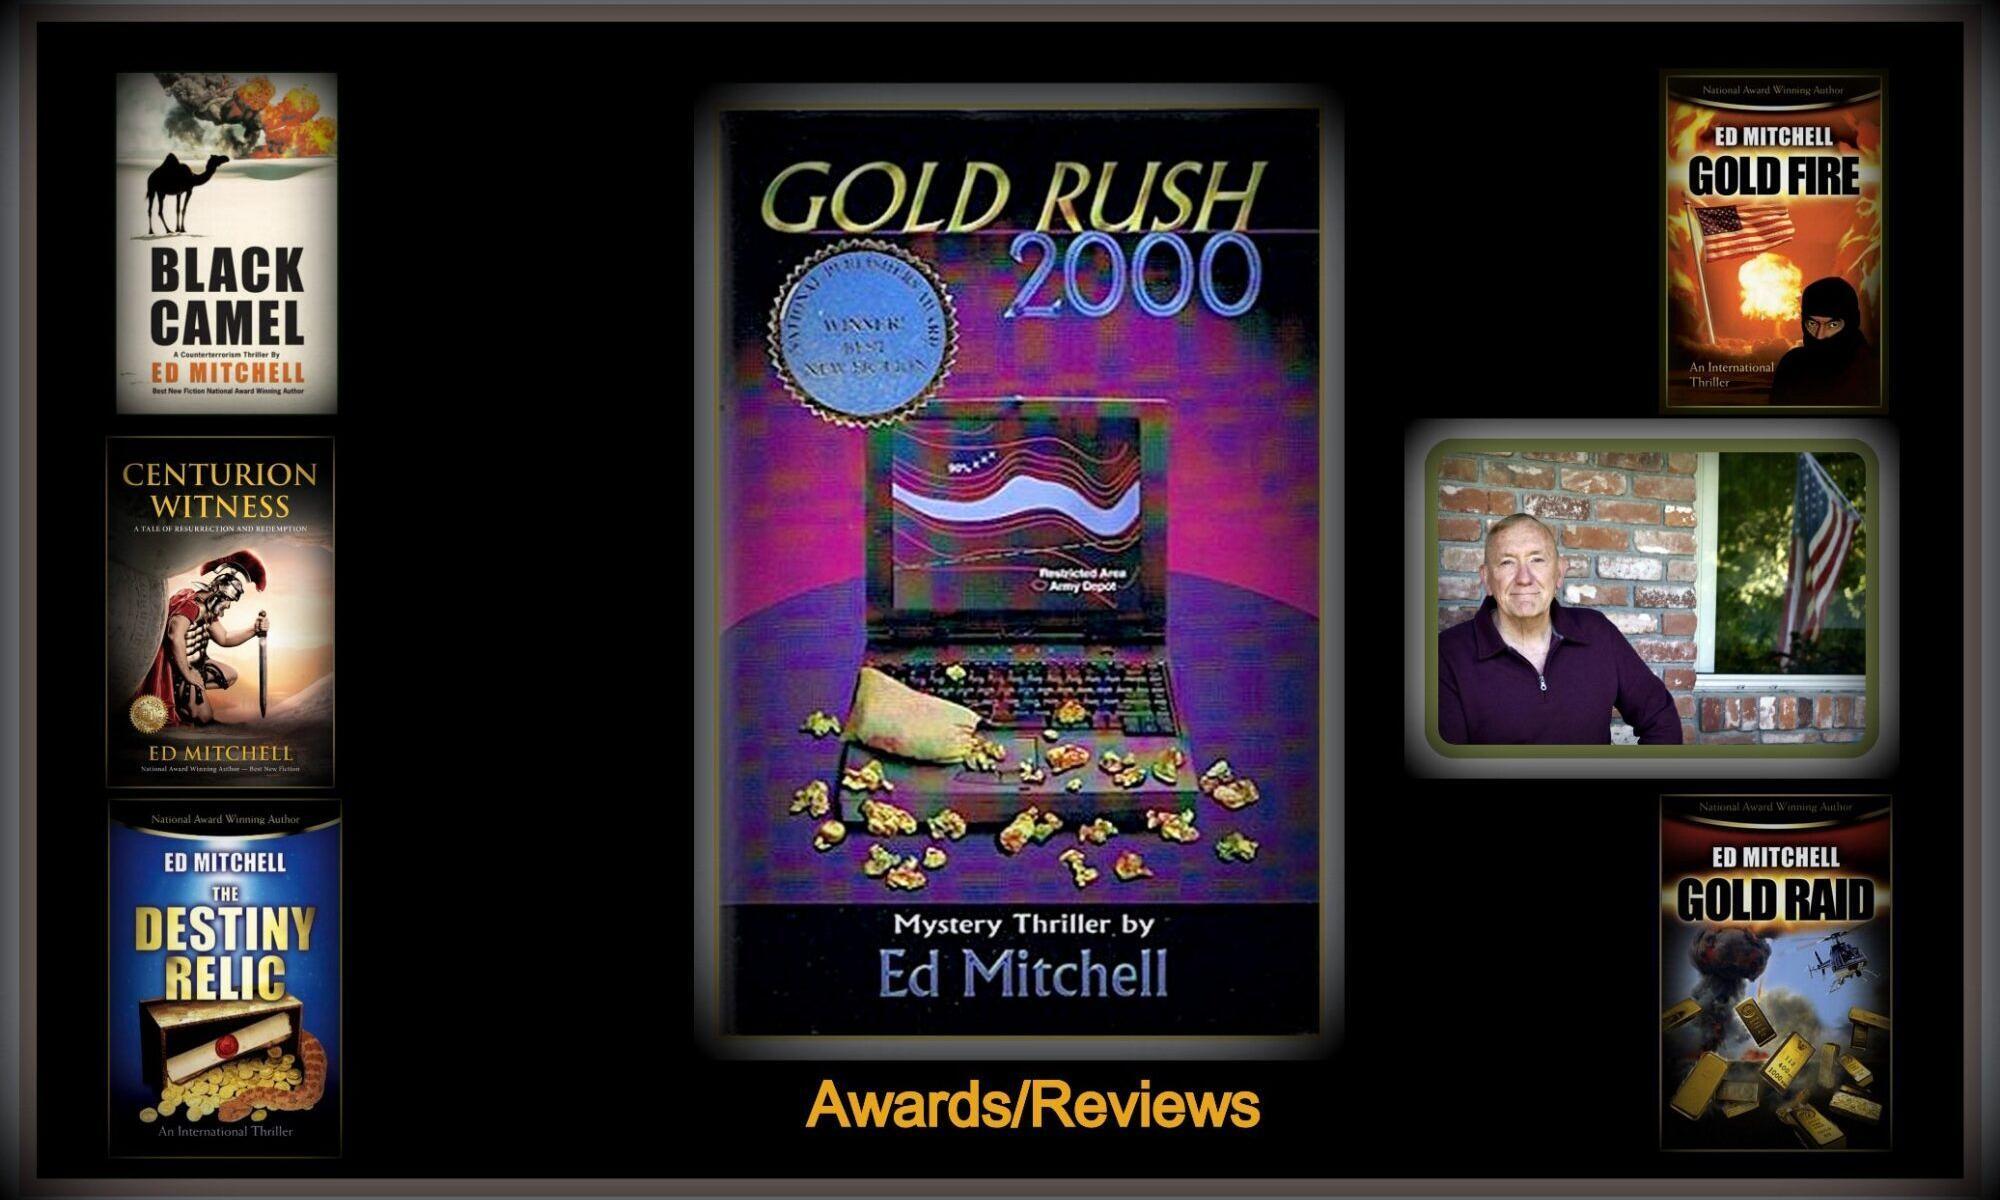 Gold Rush 2000 Award Winning book written by Ed Mitchell